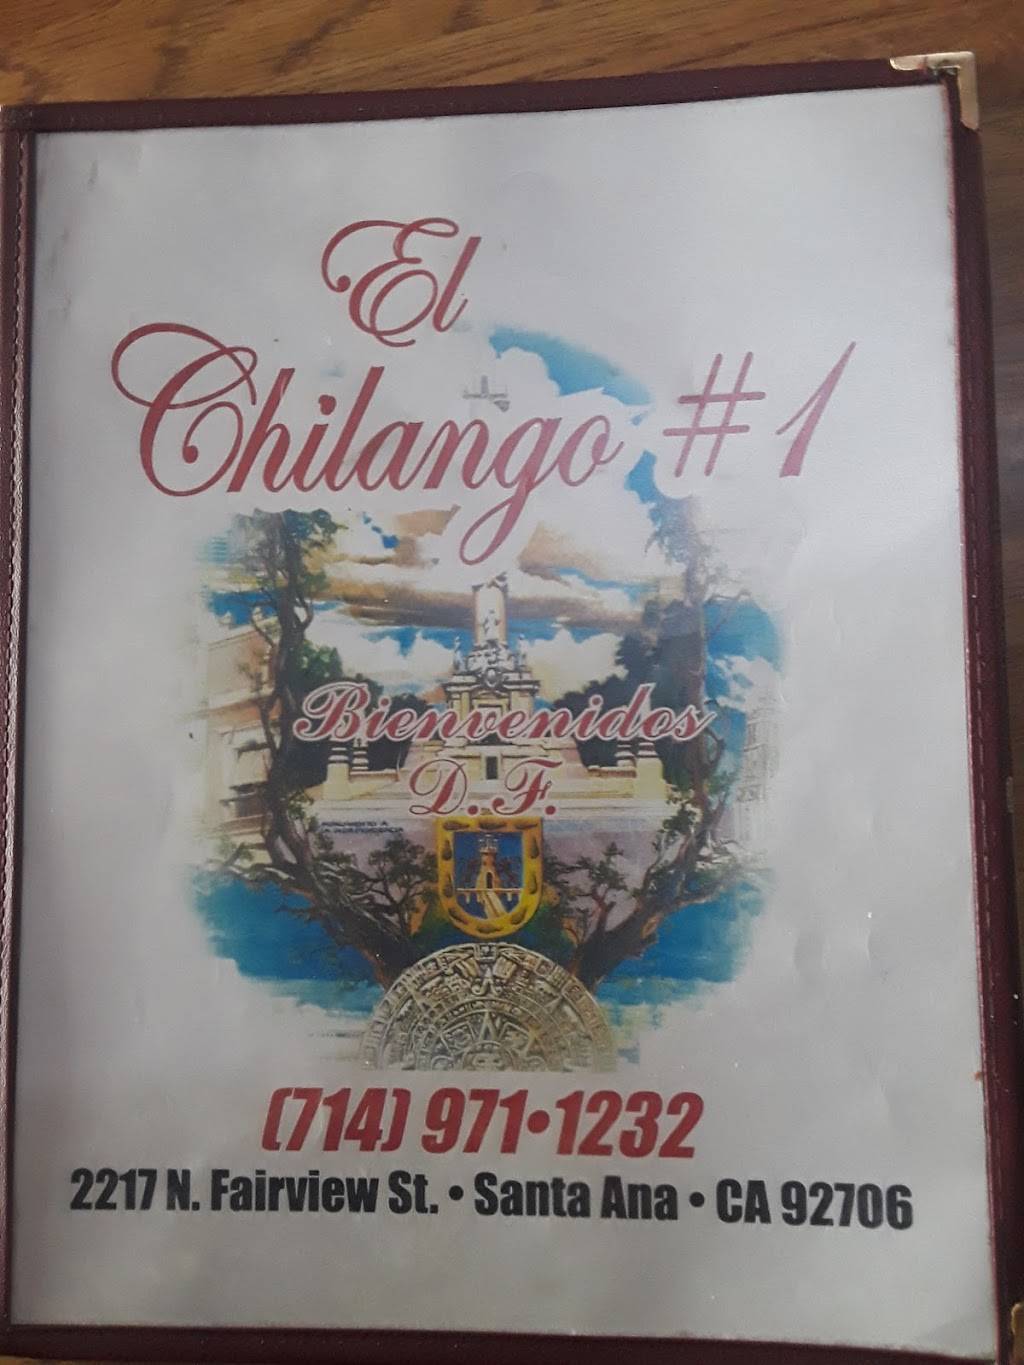 El Chilango #1 | 2217 N Fairview St, Santa Ana, CA 92706, USA | Phone: (714) 971-1232